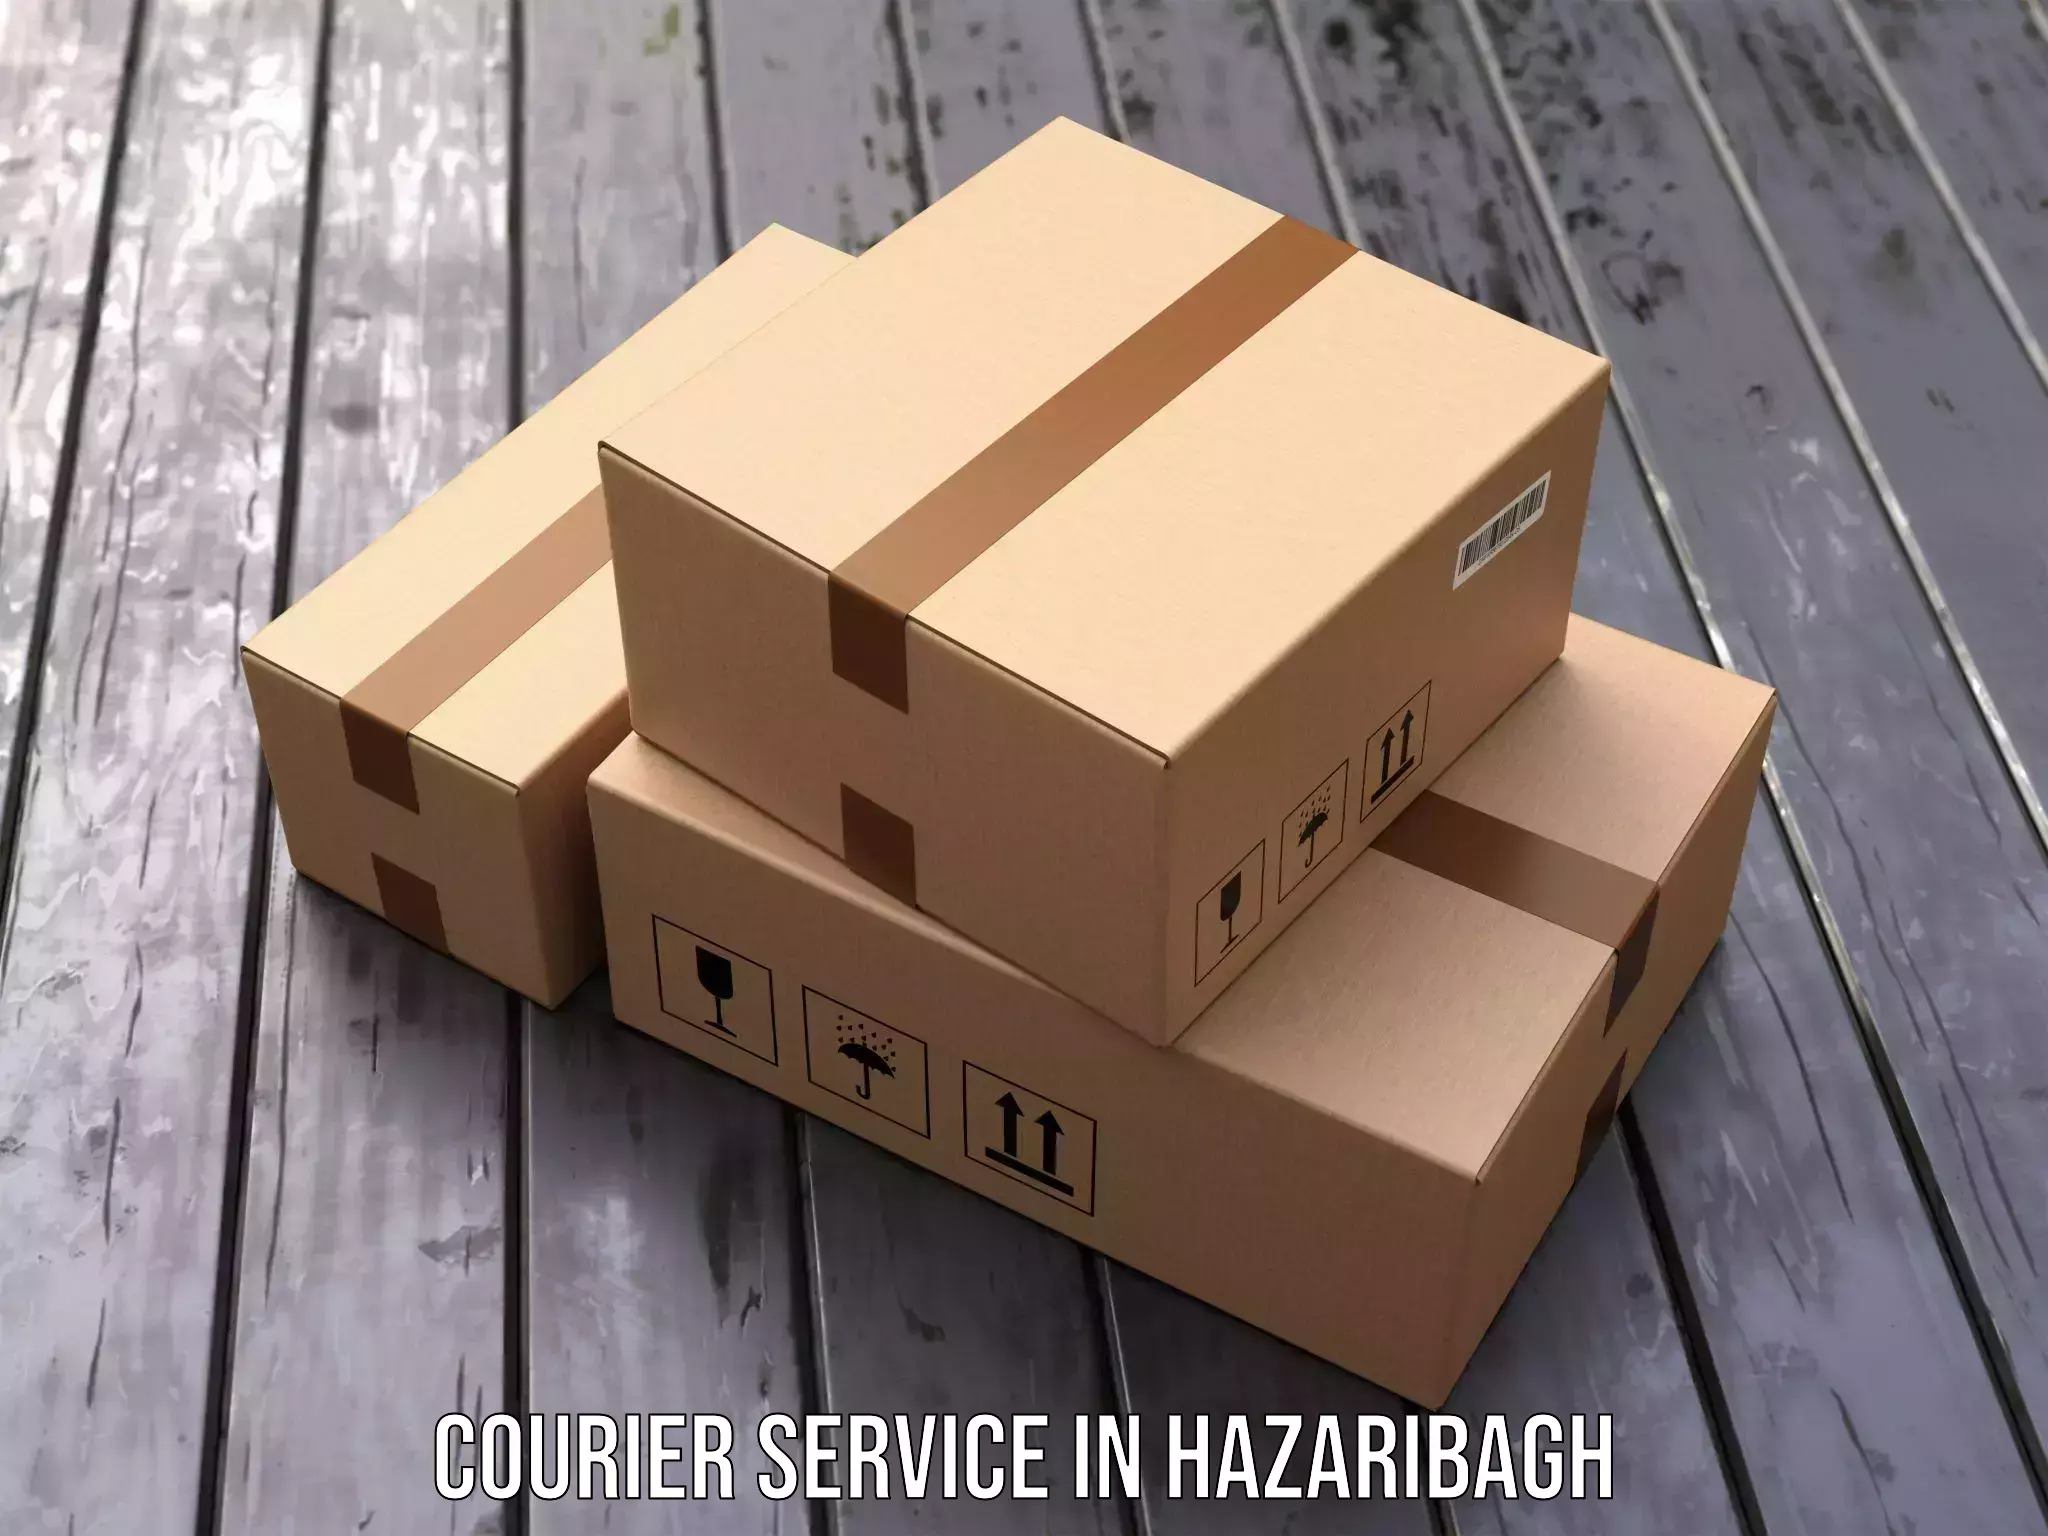 Efficient cargo handling in Hazaribagh